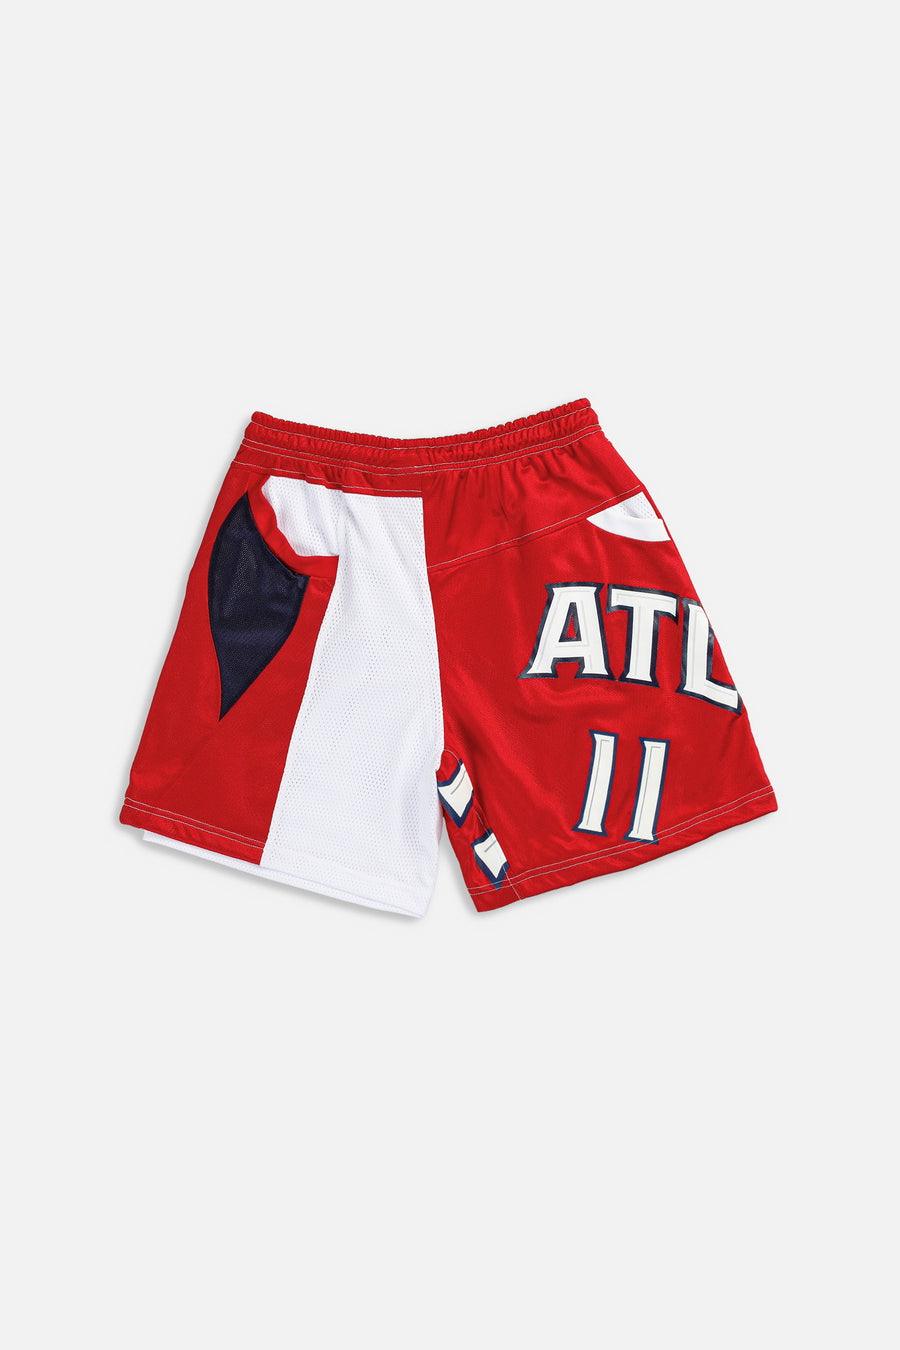 Unisex Rework Atlanta Hawks NBA Jersey Shorts - L